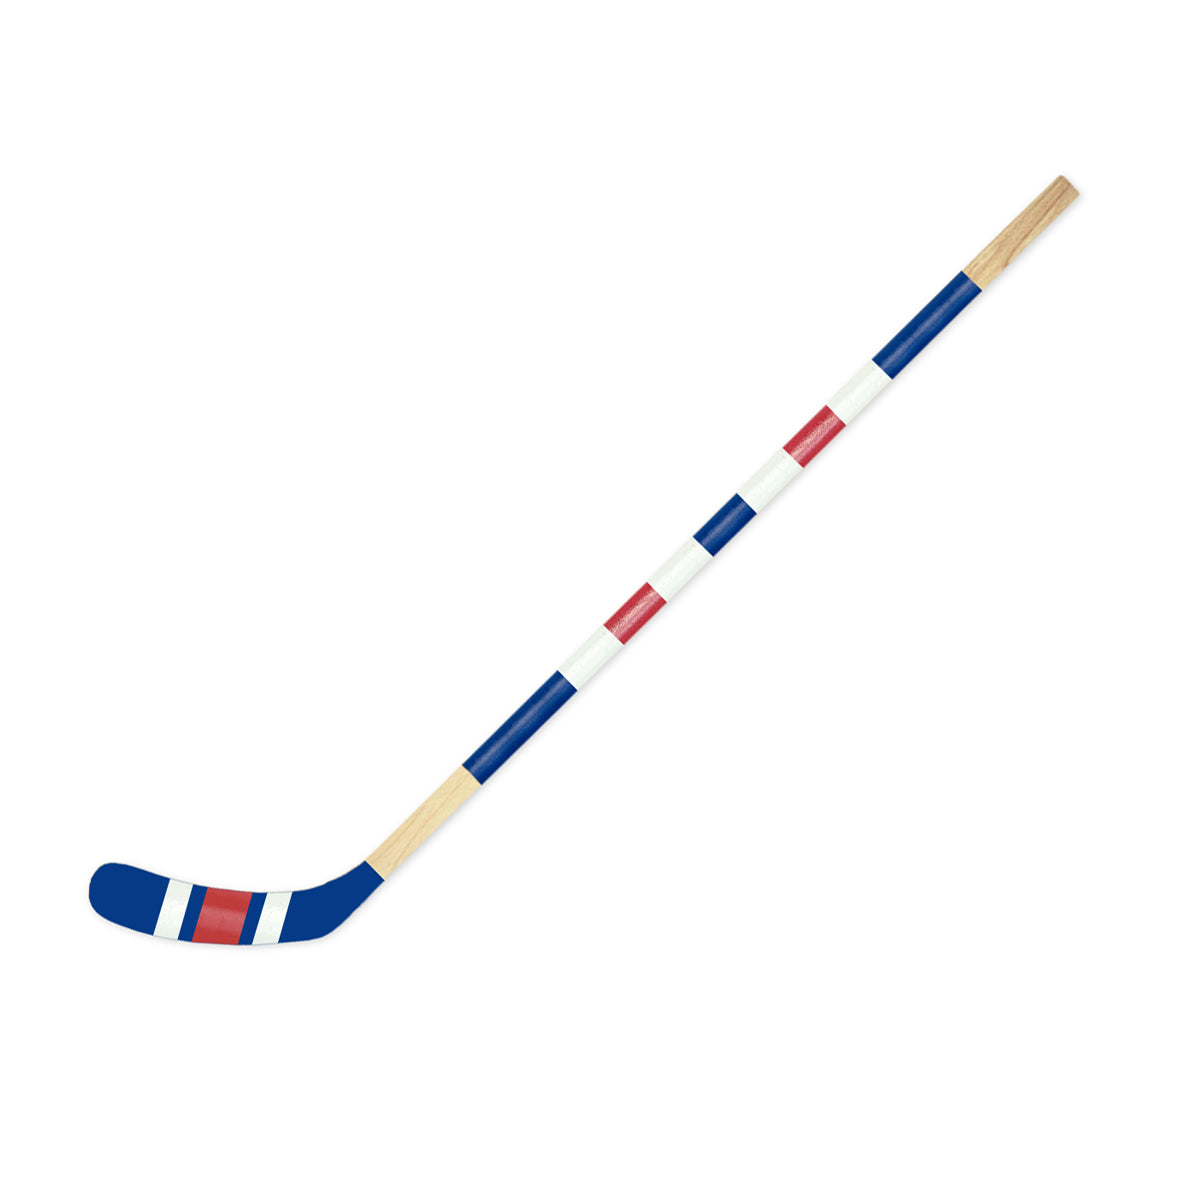 No. 16 Mitchell Hockey Stick